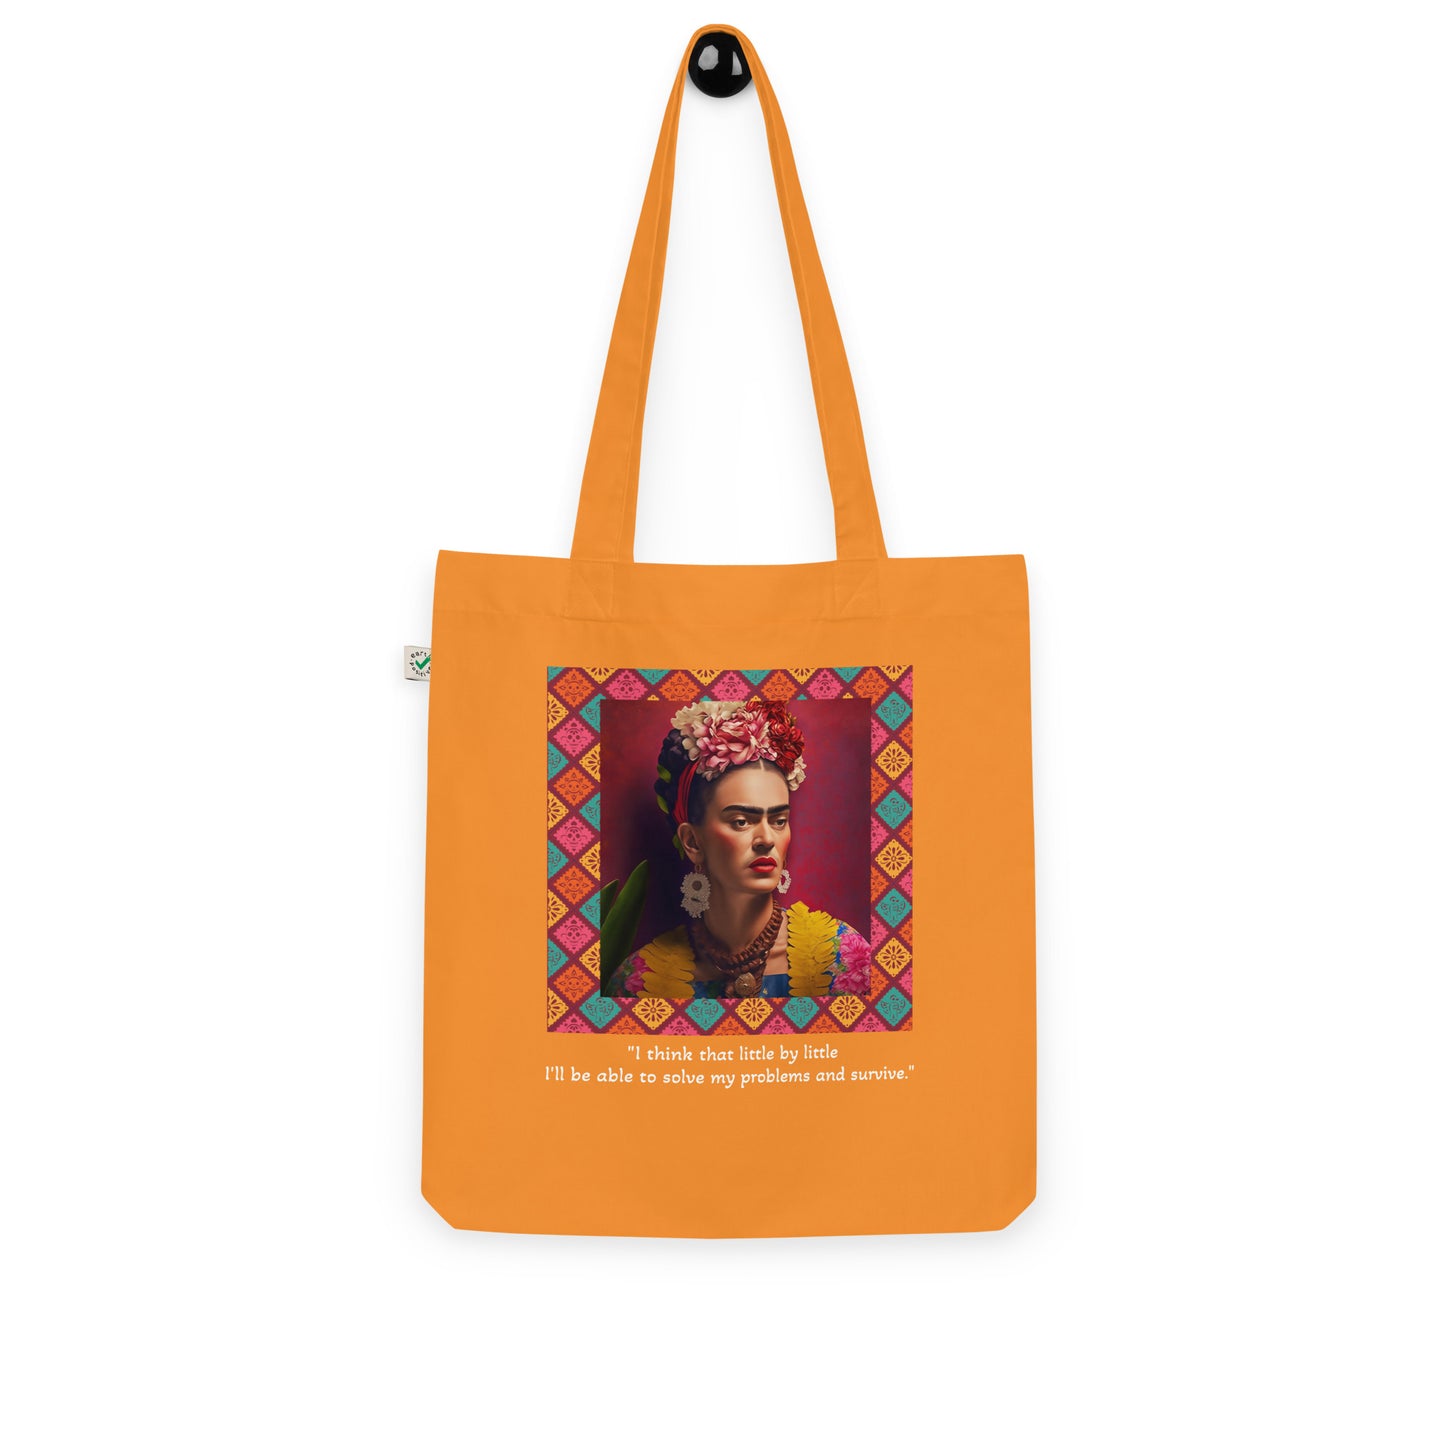 Frida Kahlo - Organic fashion bag